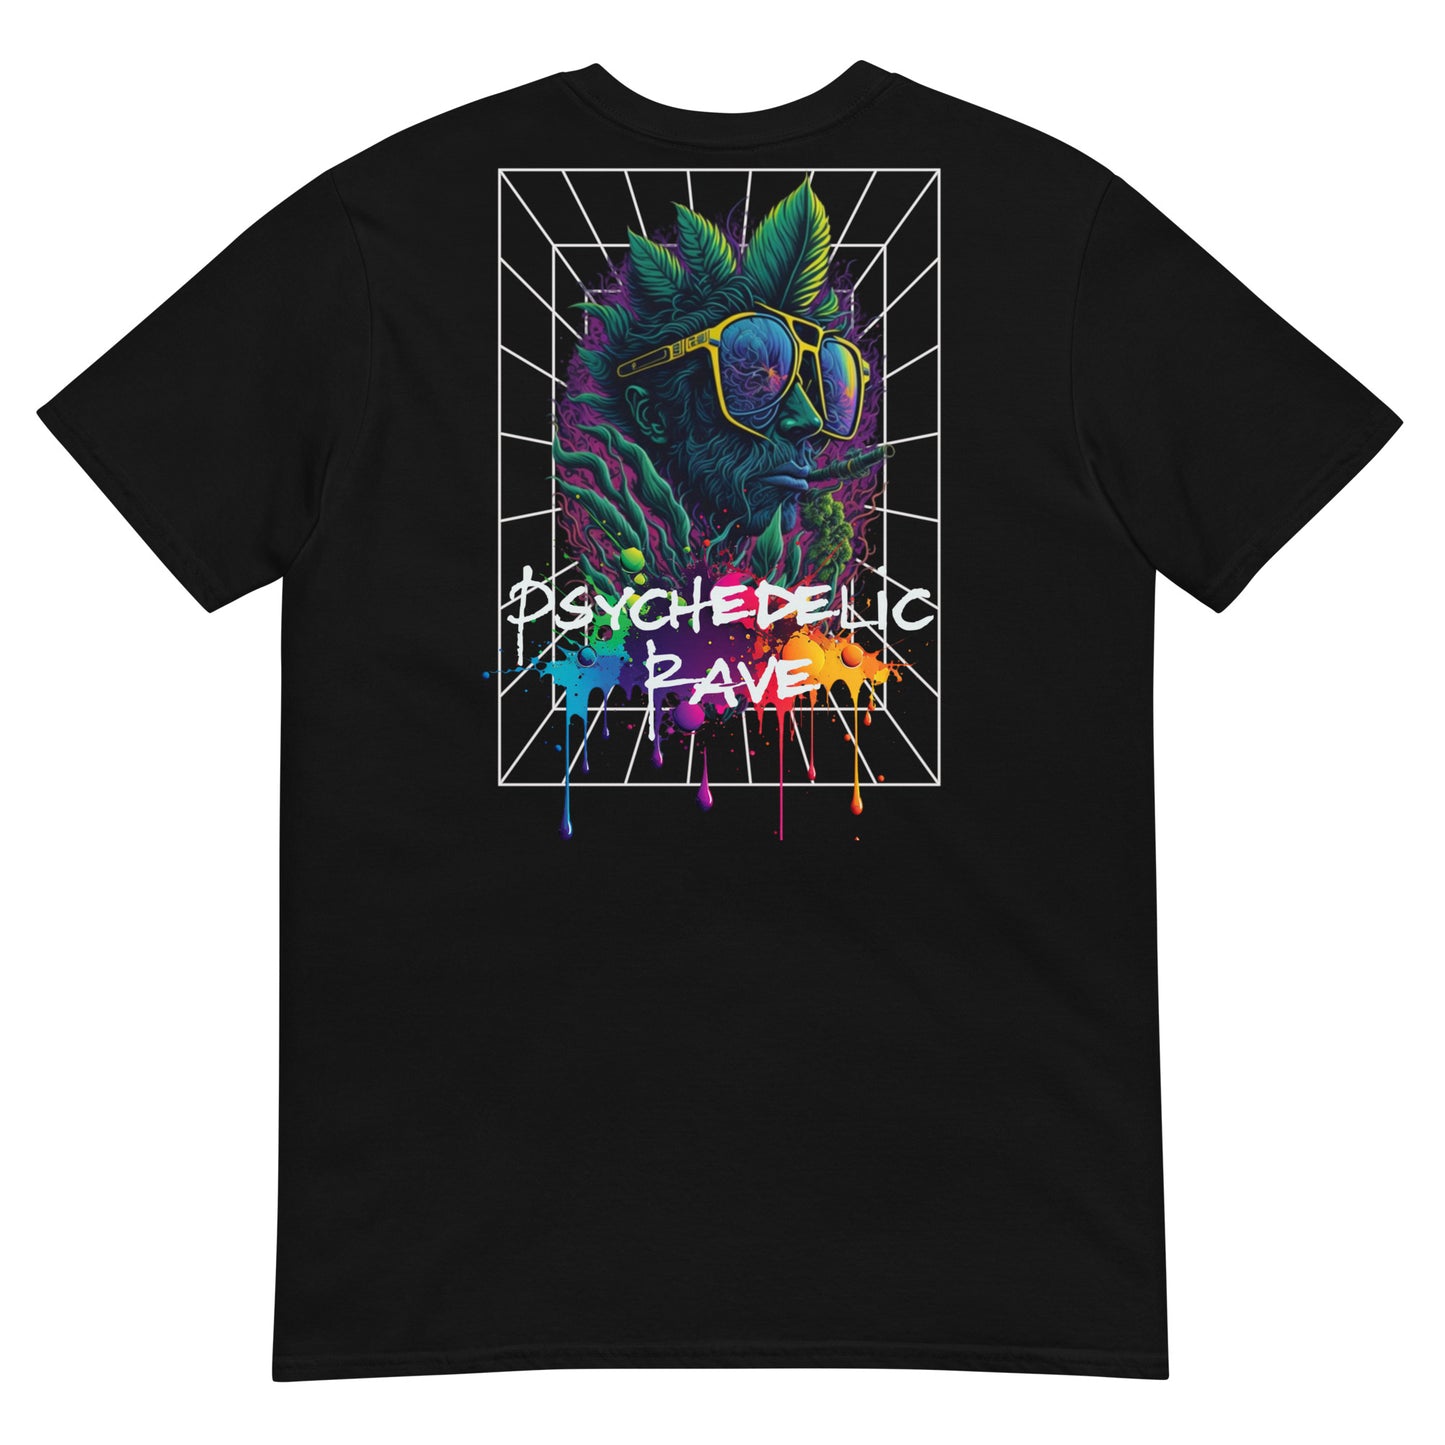 Psychedelic Rave - Camiseta unisex